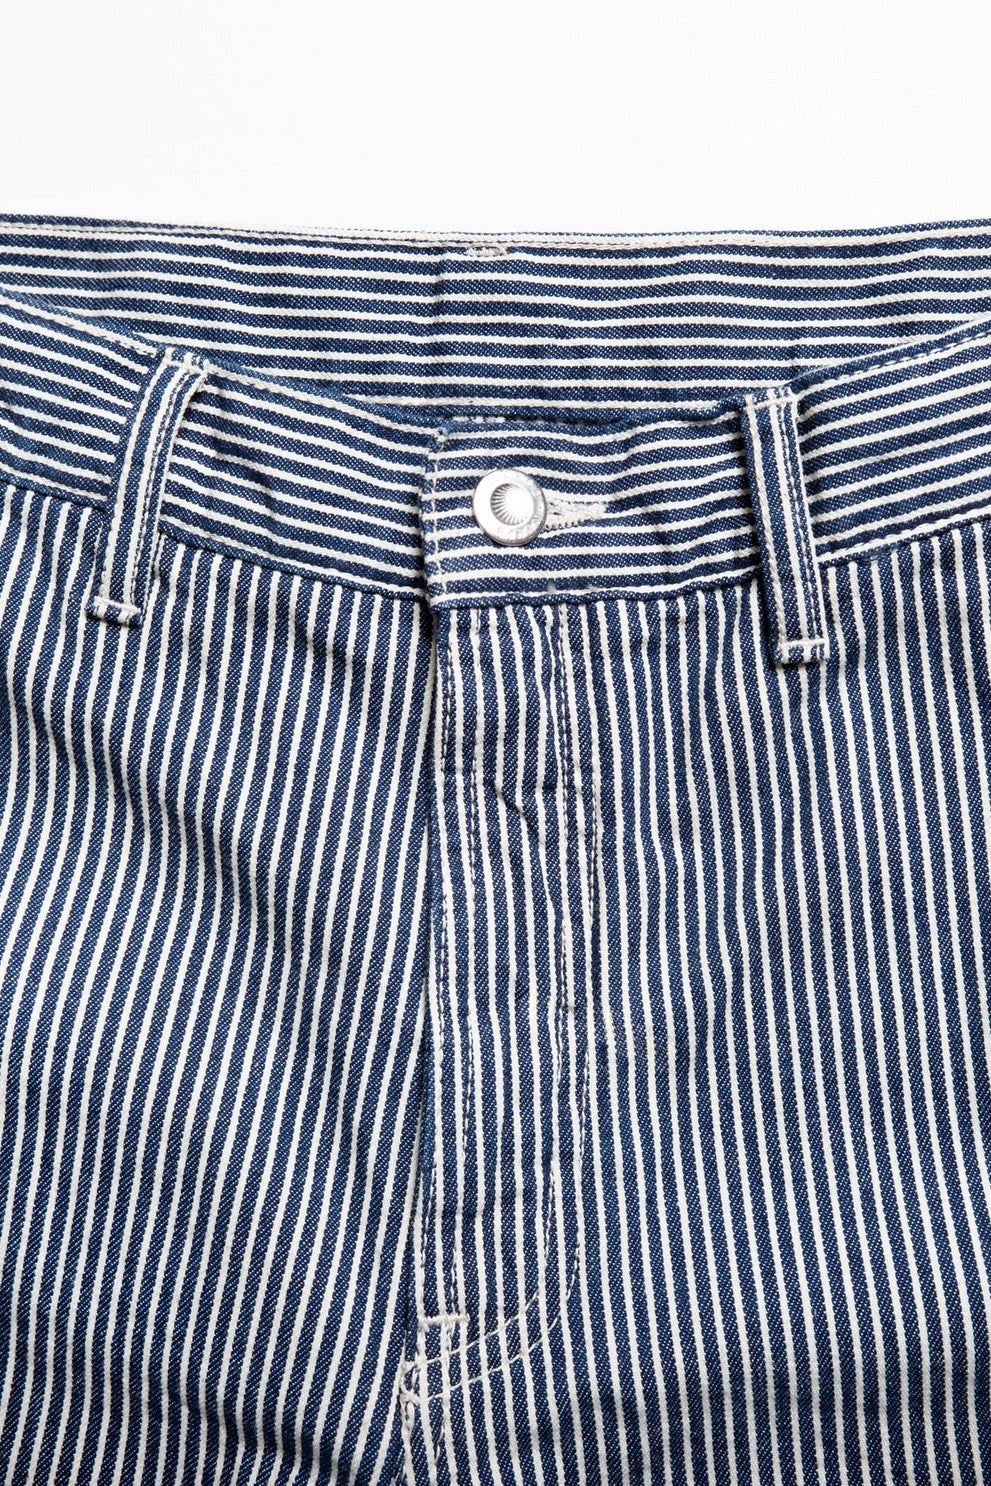 STINA Hickory Striped Pants blue/offwhite